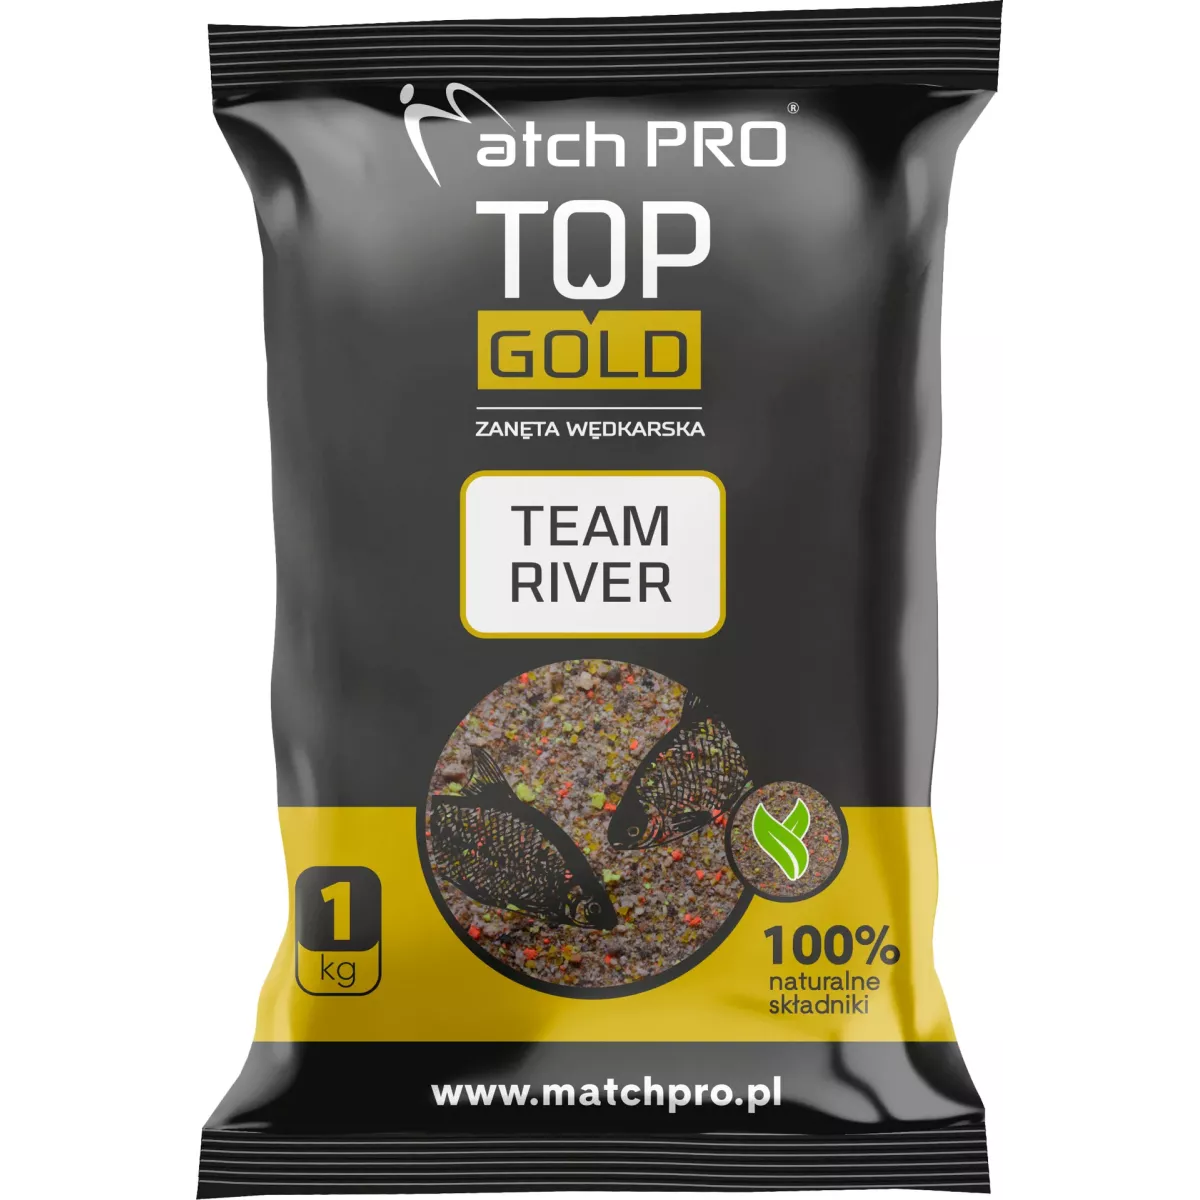 Zanęta MatchPro Top Gold 1kg - TEAM RIVER